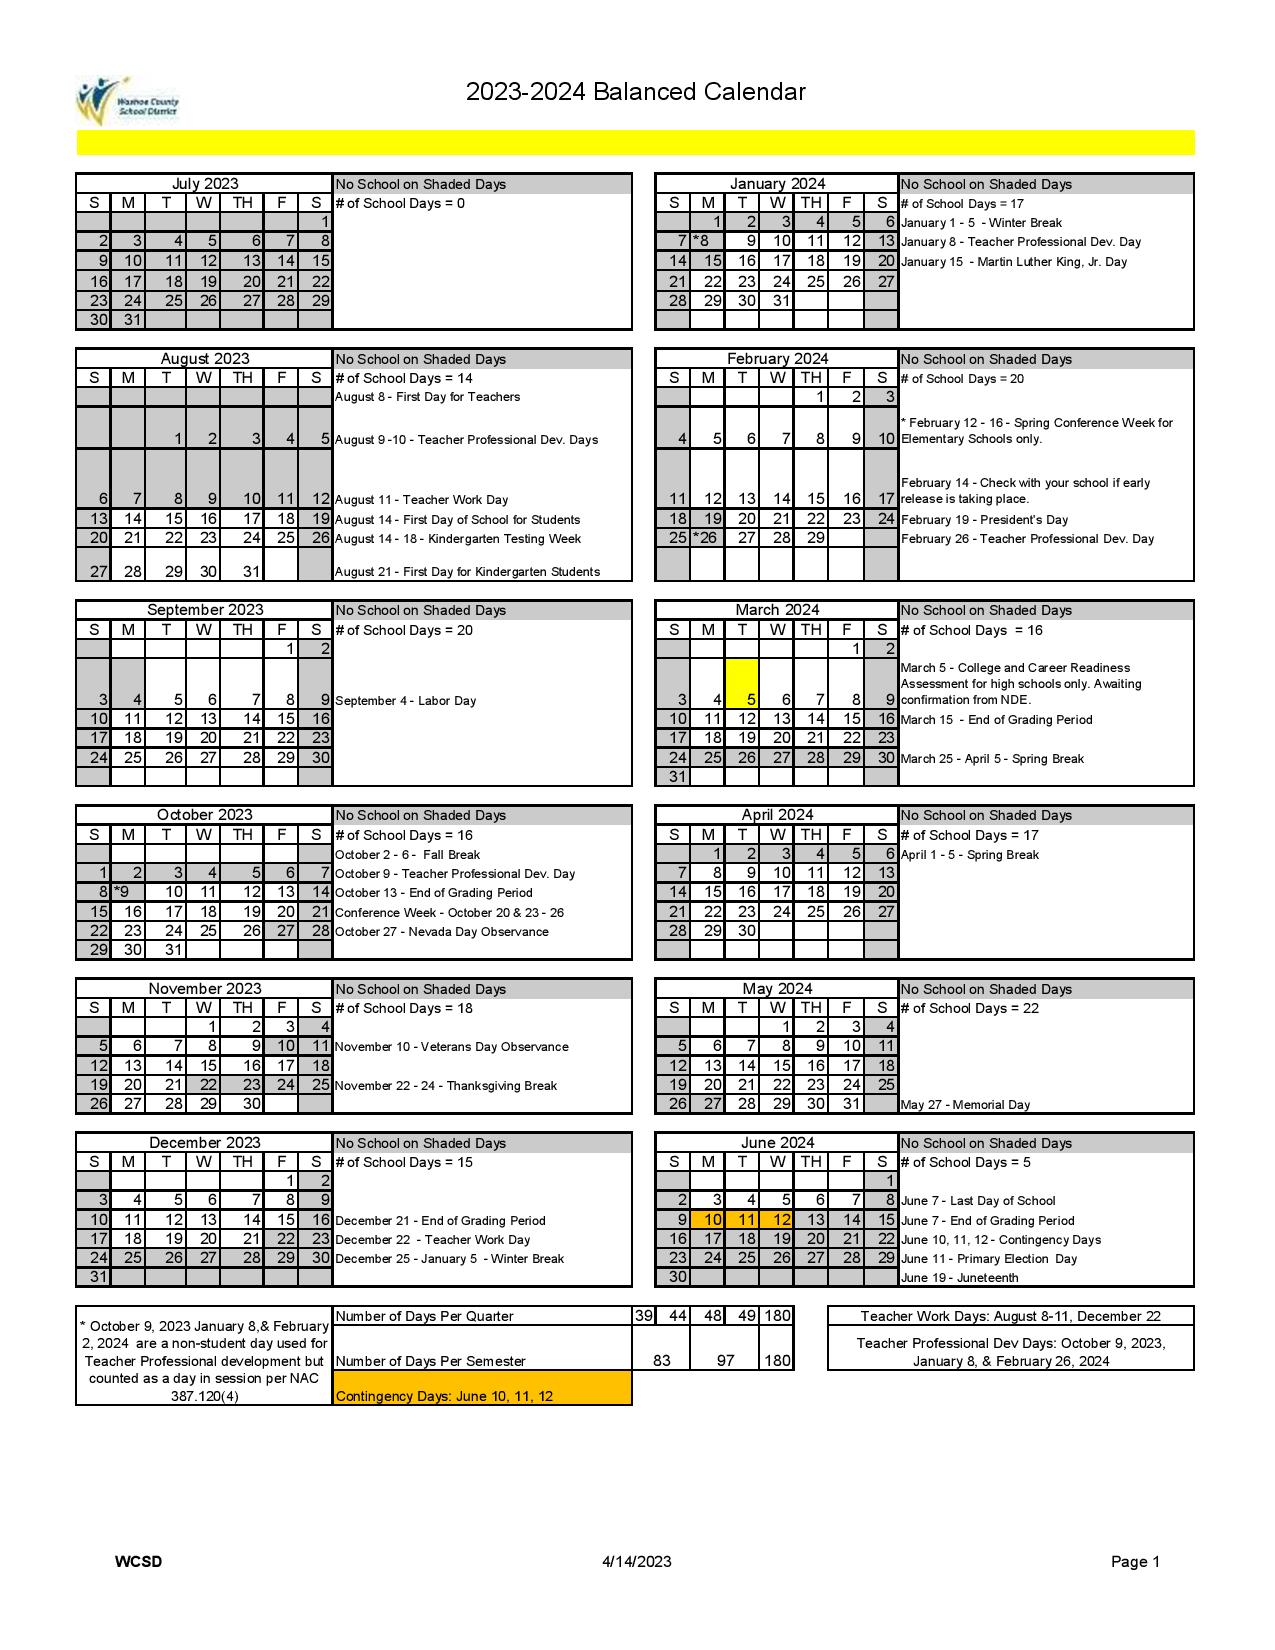 Washoe County School District Calendar 2023-2024 in PDF